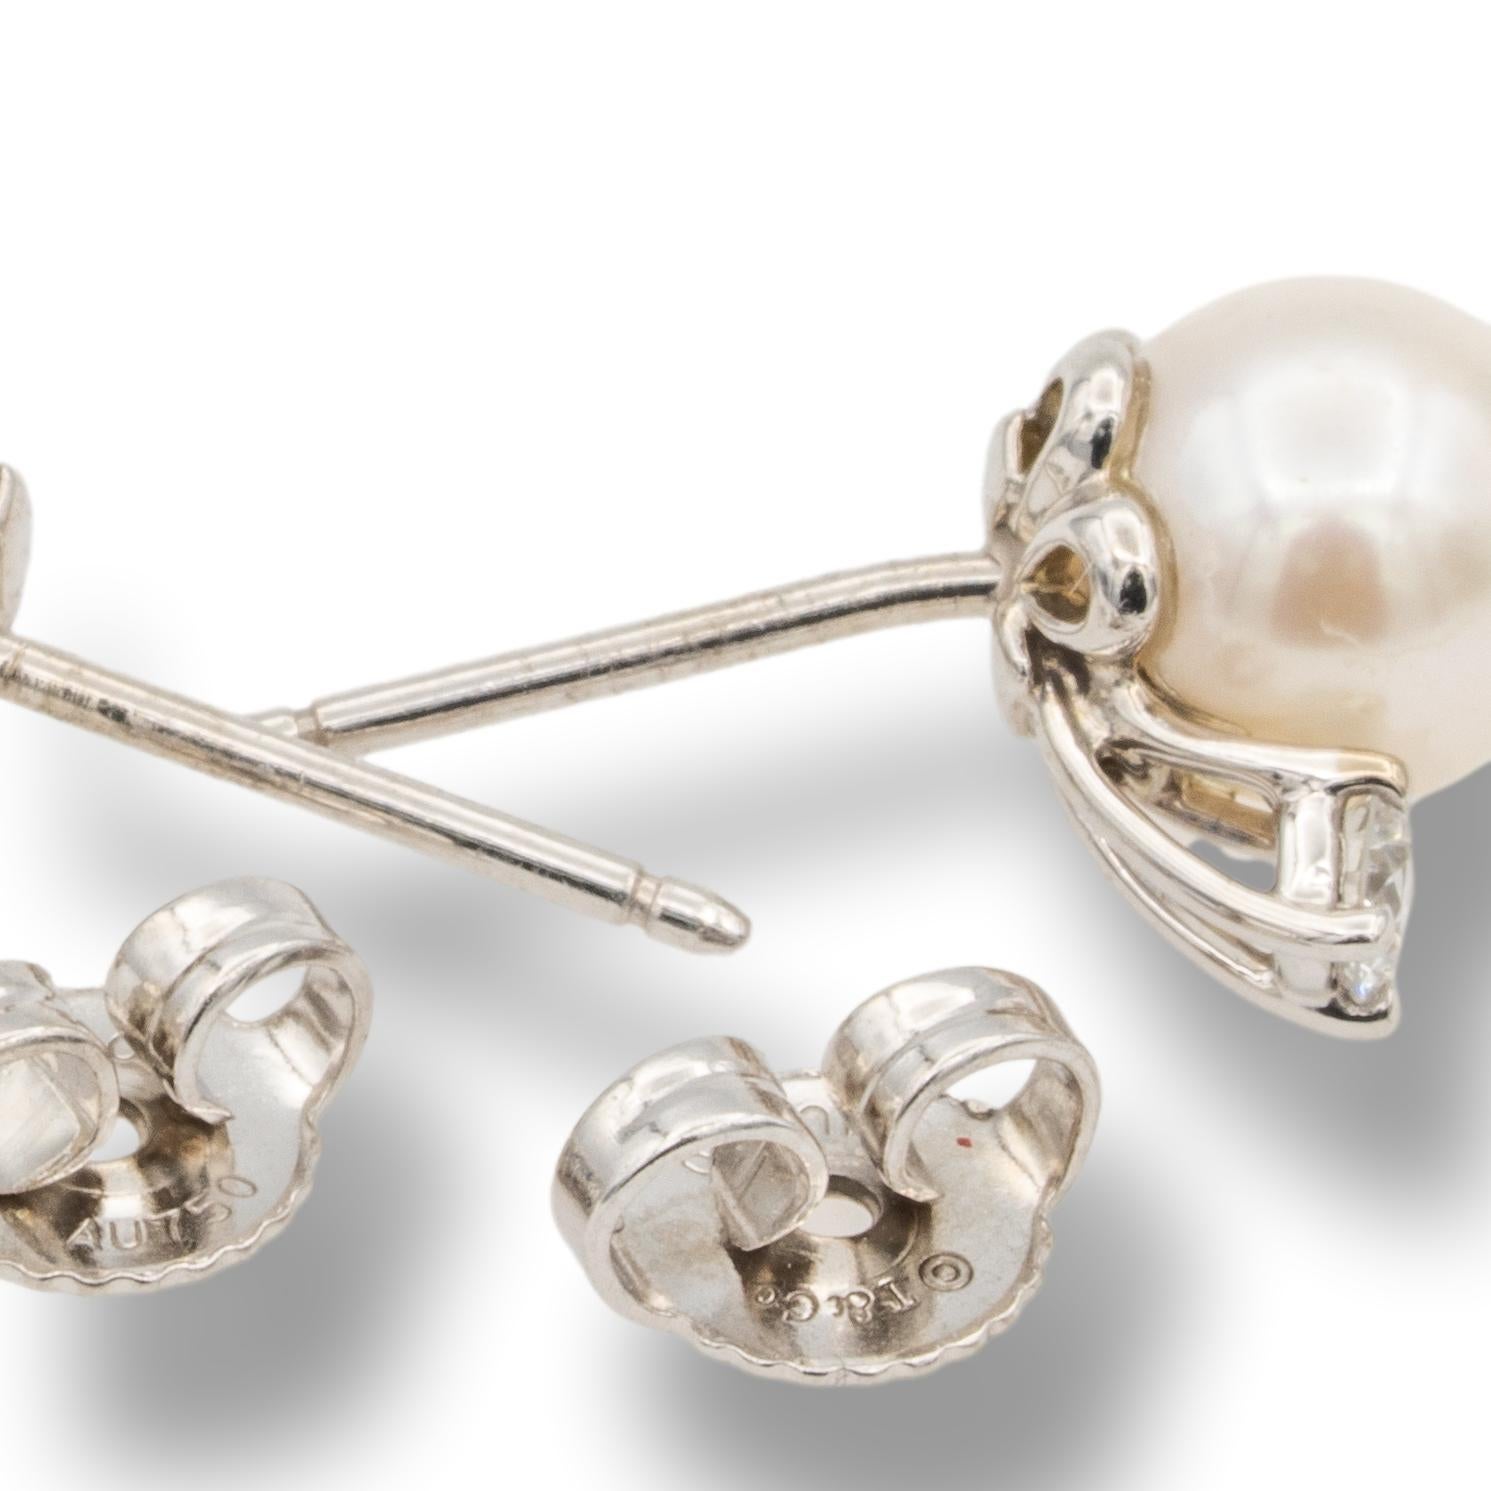 pearl and diamond earrings tiffany